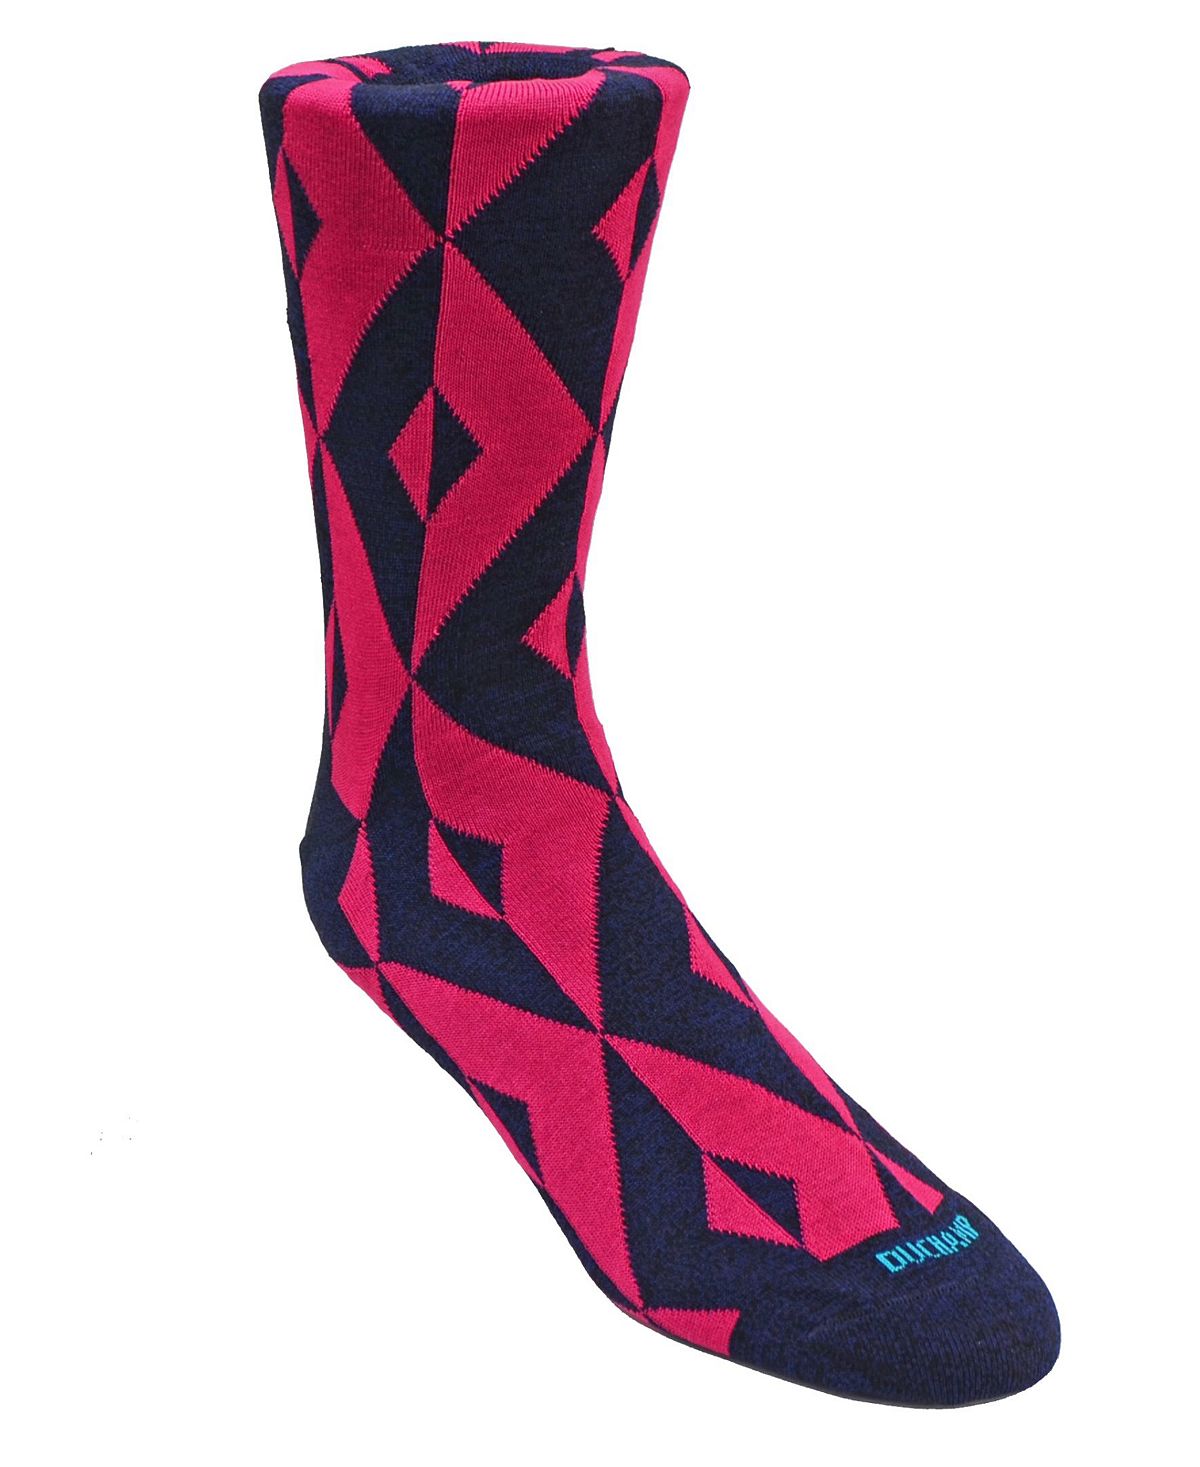 Мужские классические носки с геометрическим дизайном DUCHAMP LONDON